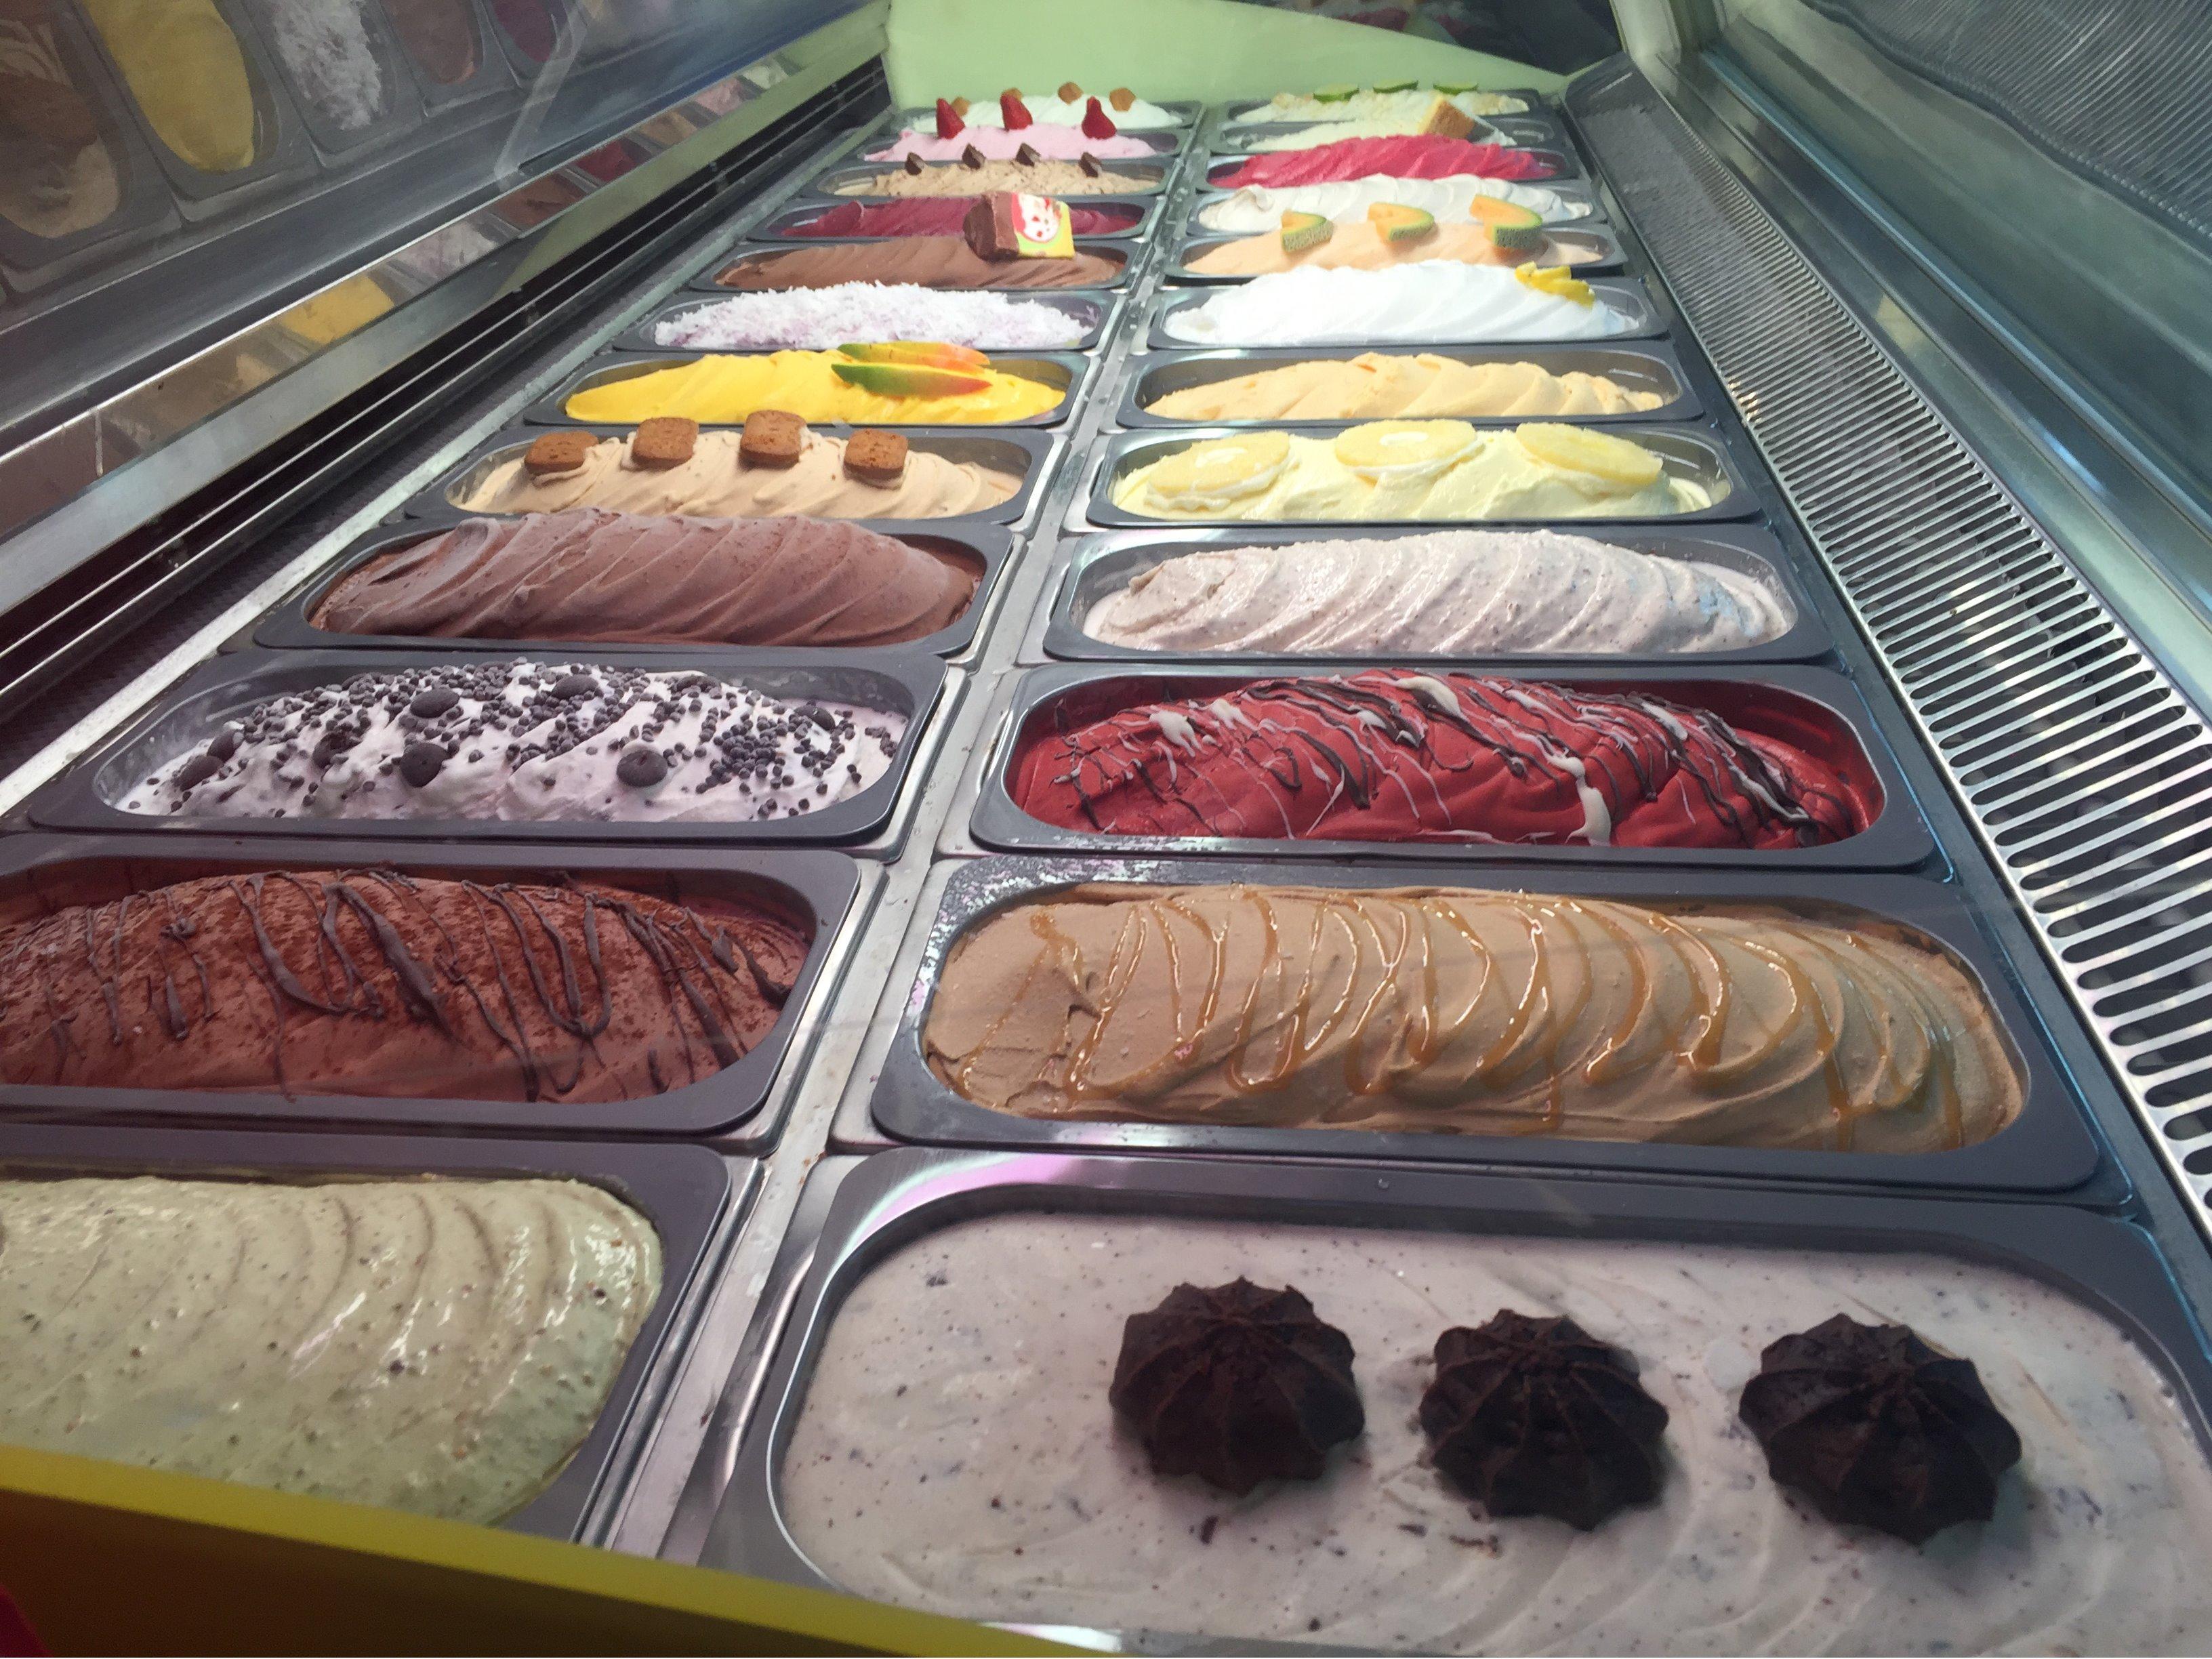 Gelazzi makes the finest handcrafted gelato, sorbetto, & Italian ice creams